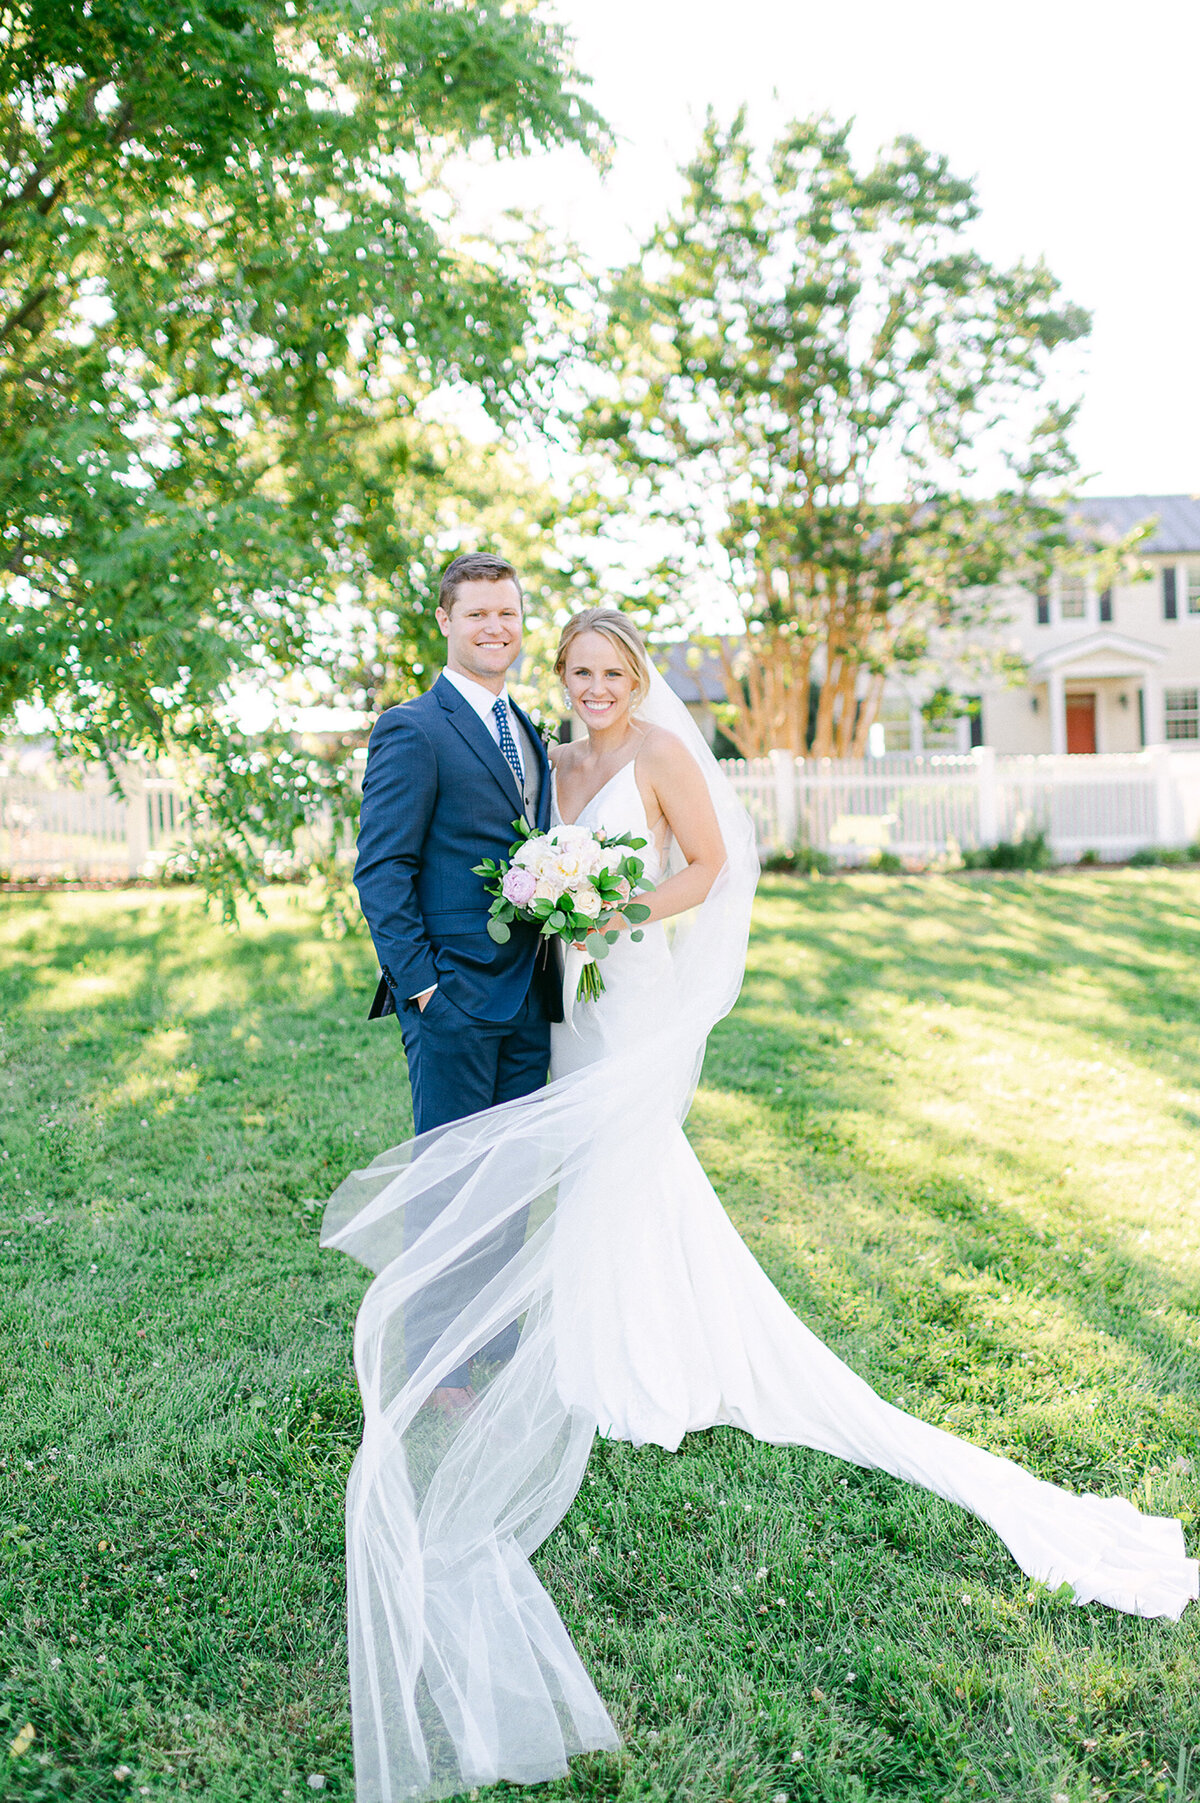 Jennifer Bosak Photography - DC Area Wedding Photography - DC, Virginia, Maryland - Kaitlyn + Jordan - Stone Tower Winery - 41